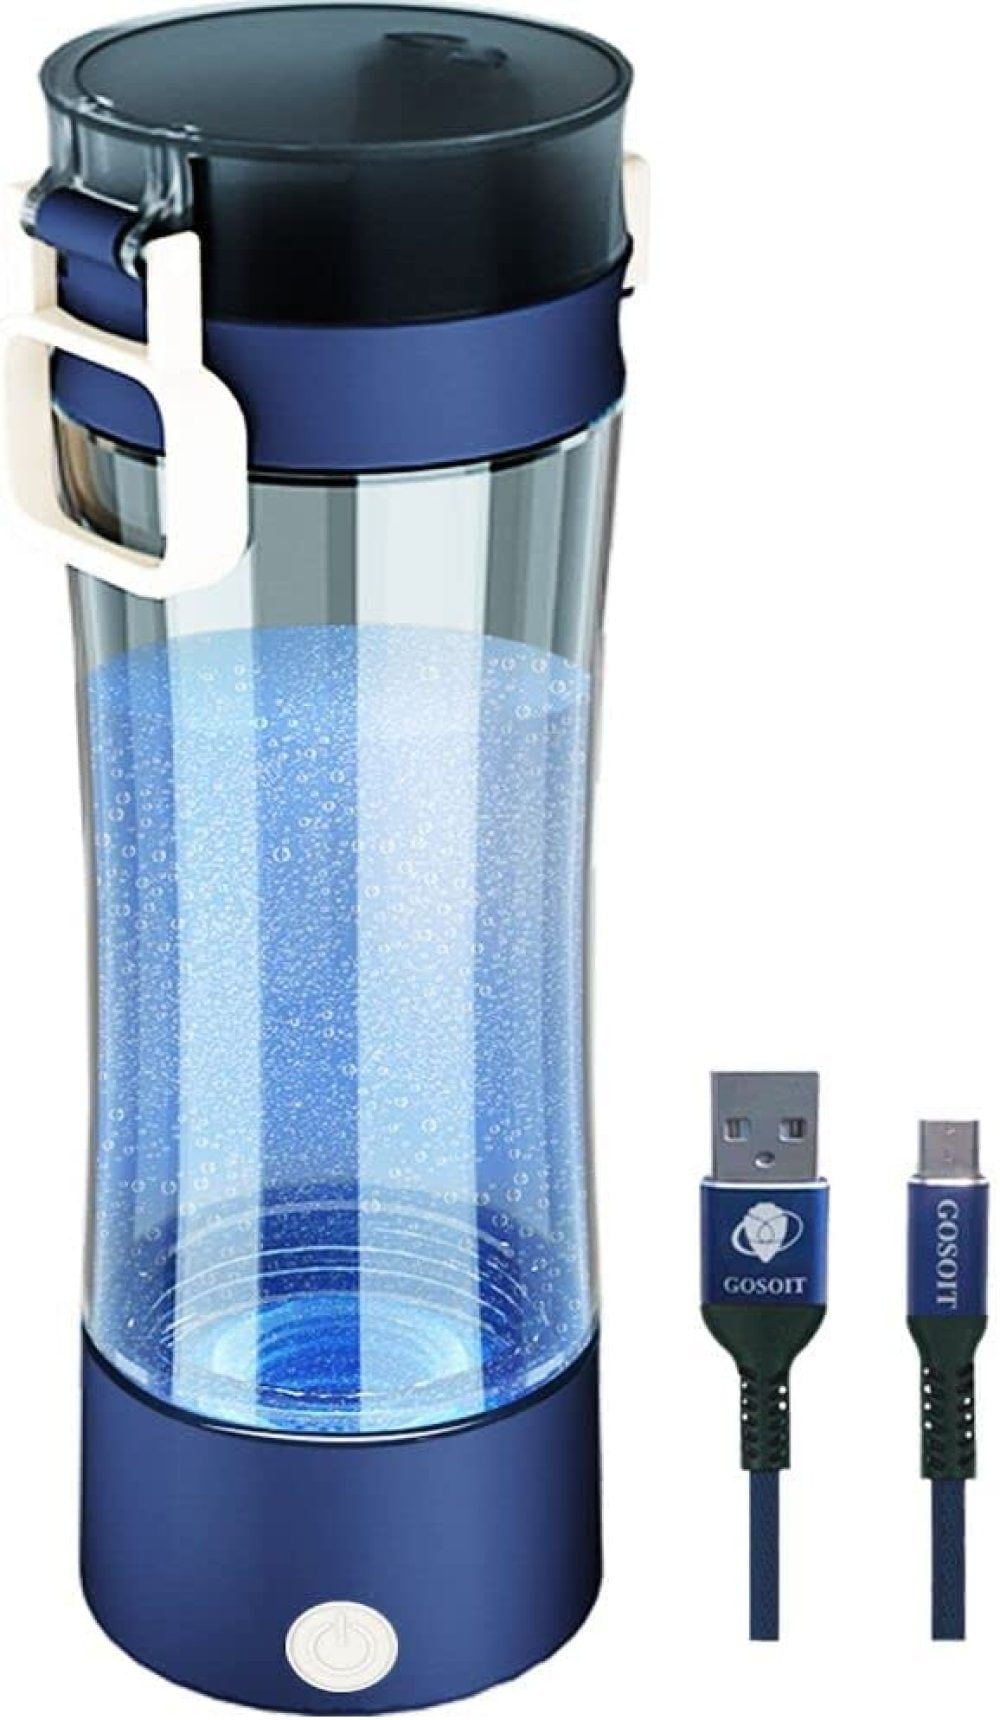 Blue GOSOIT Hydrogen Alkaline Water Bottle Maker Machine Hydrogen Water Generator Ionizer with SPE and PEM Technology,US Membrane Make Hydrogen Content up to 800-1200 PPB 